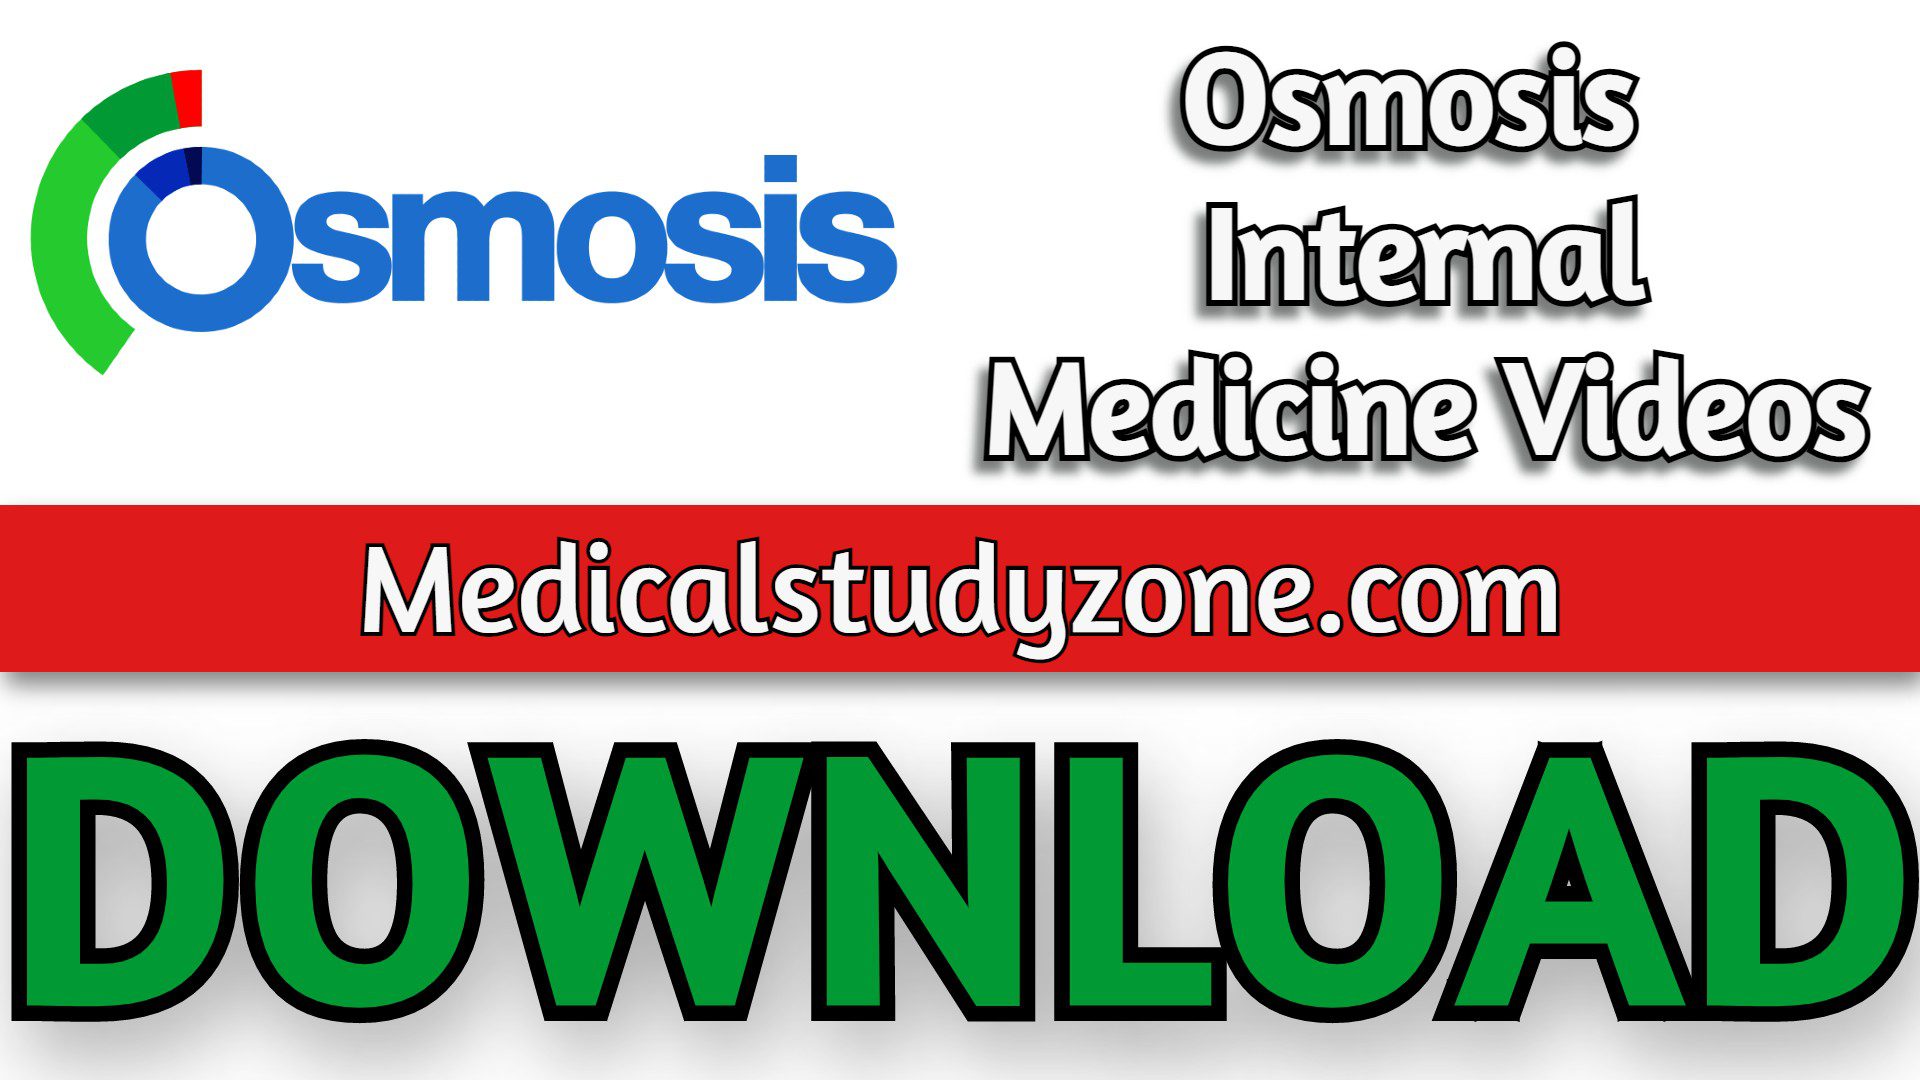 Osmosis Internal Medicine Videos 2021 Free Download